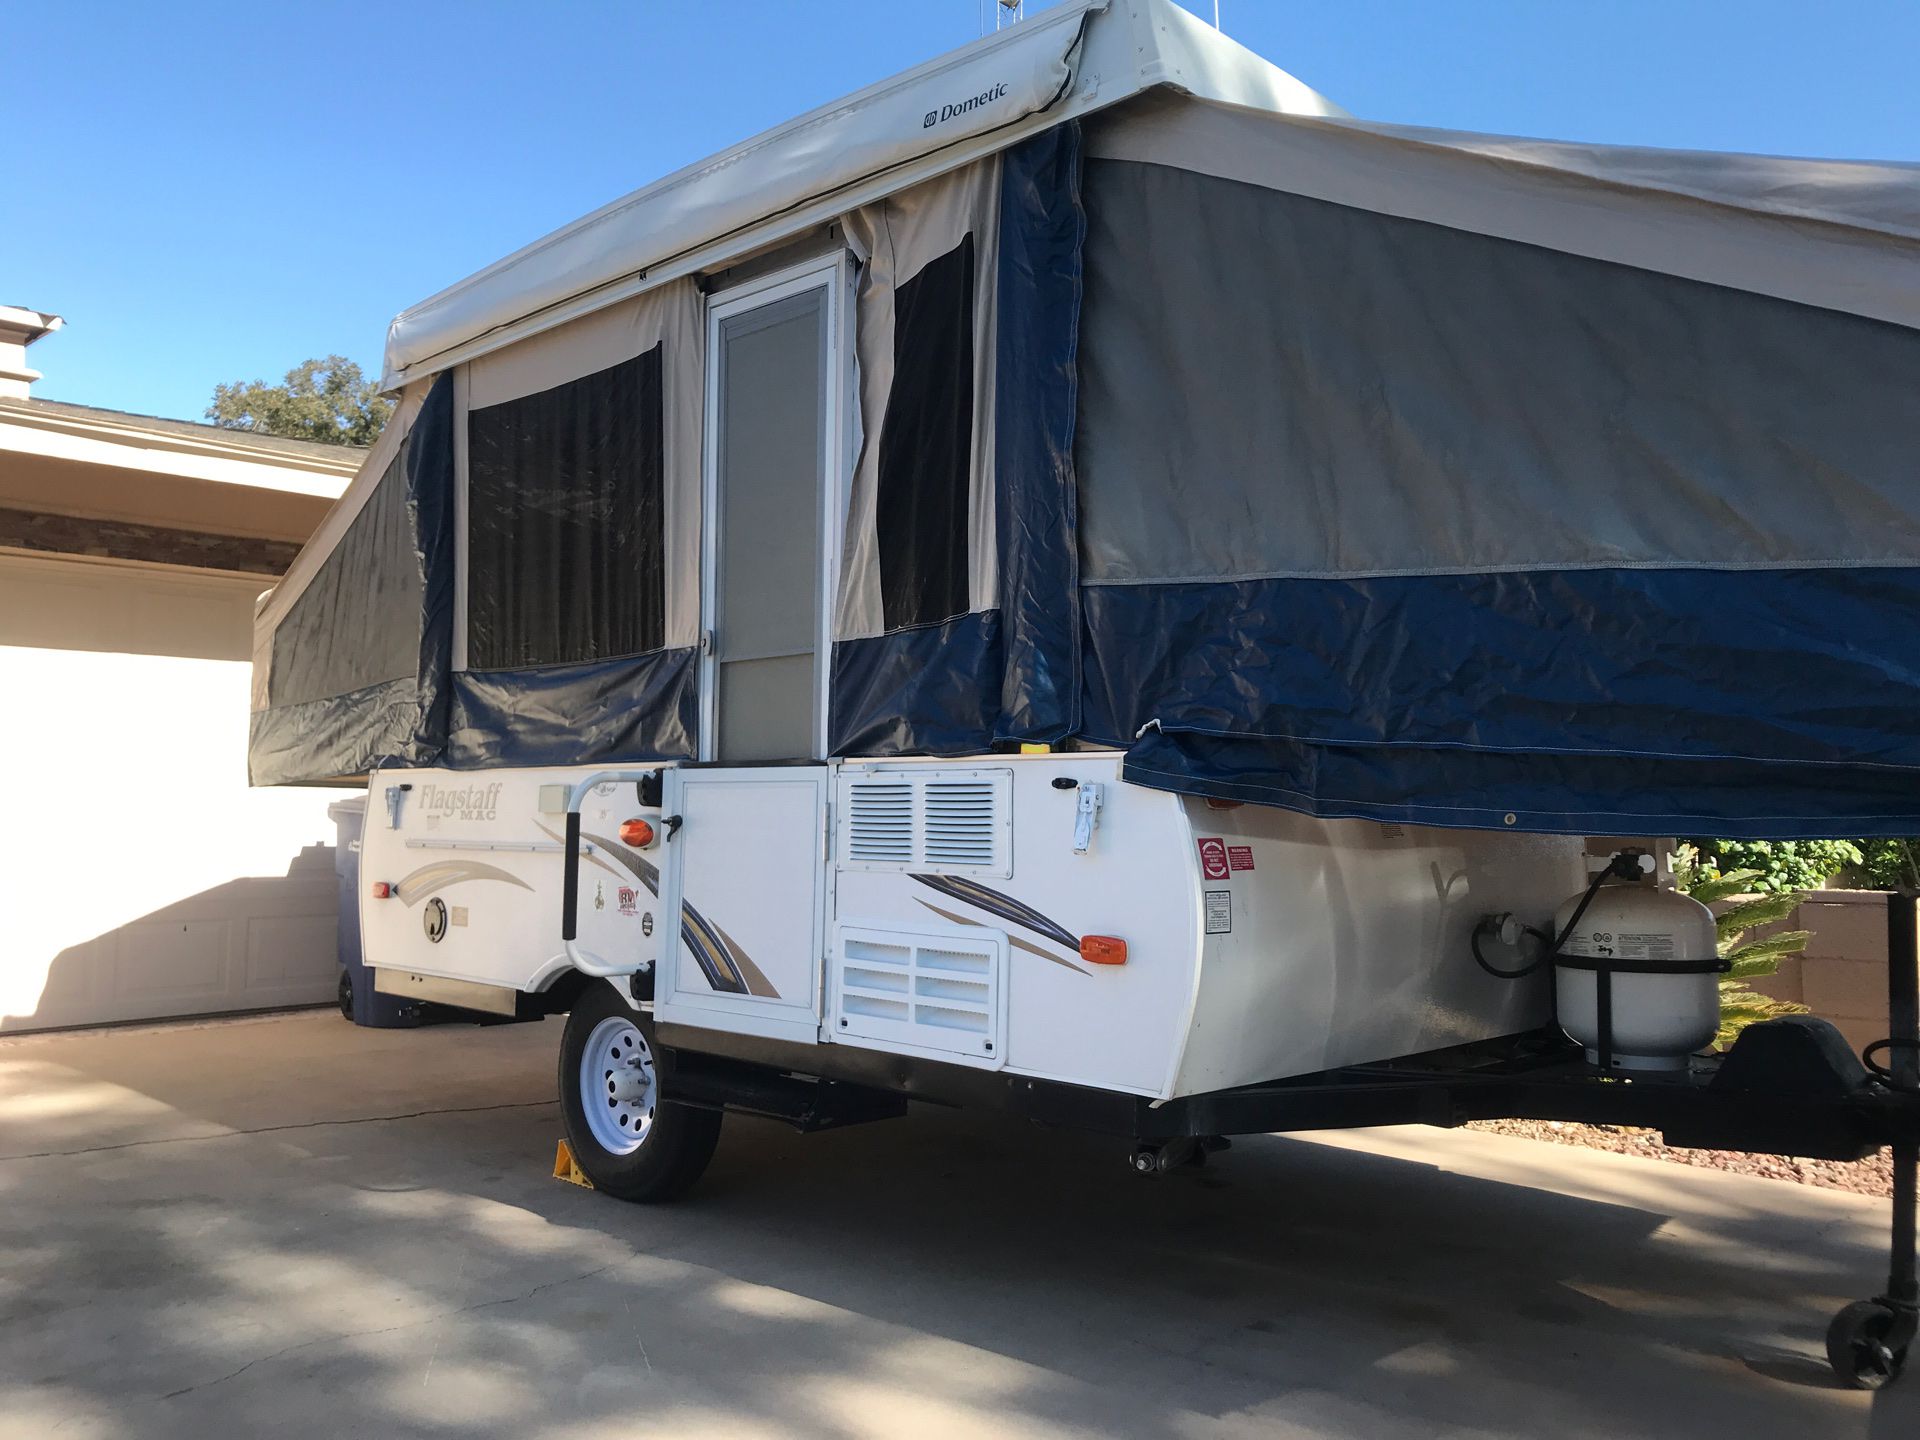 Pop up camper camping trailer